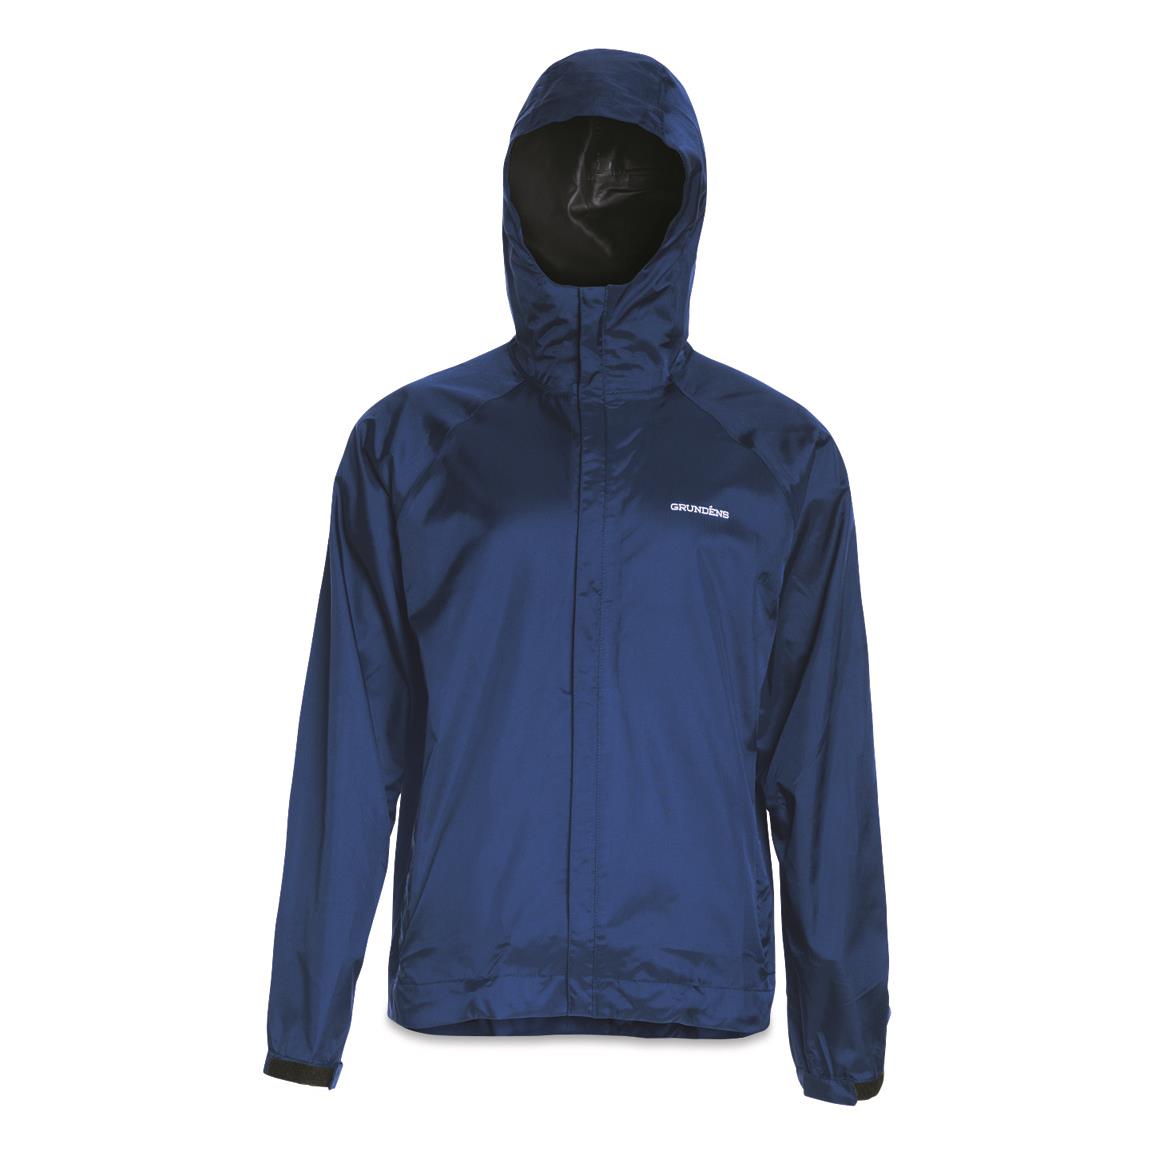 Grundens Men's Weather Watch Waterproof Jacket, Glacier Blue